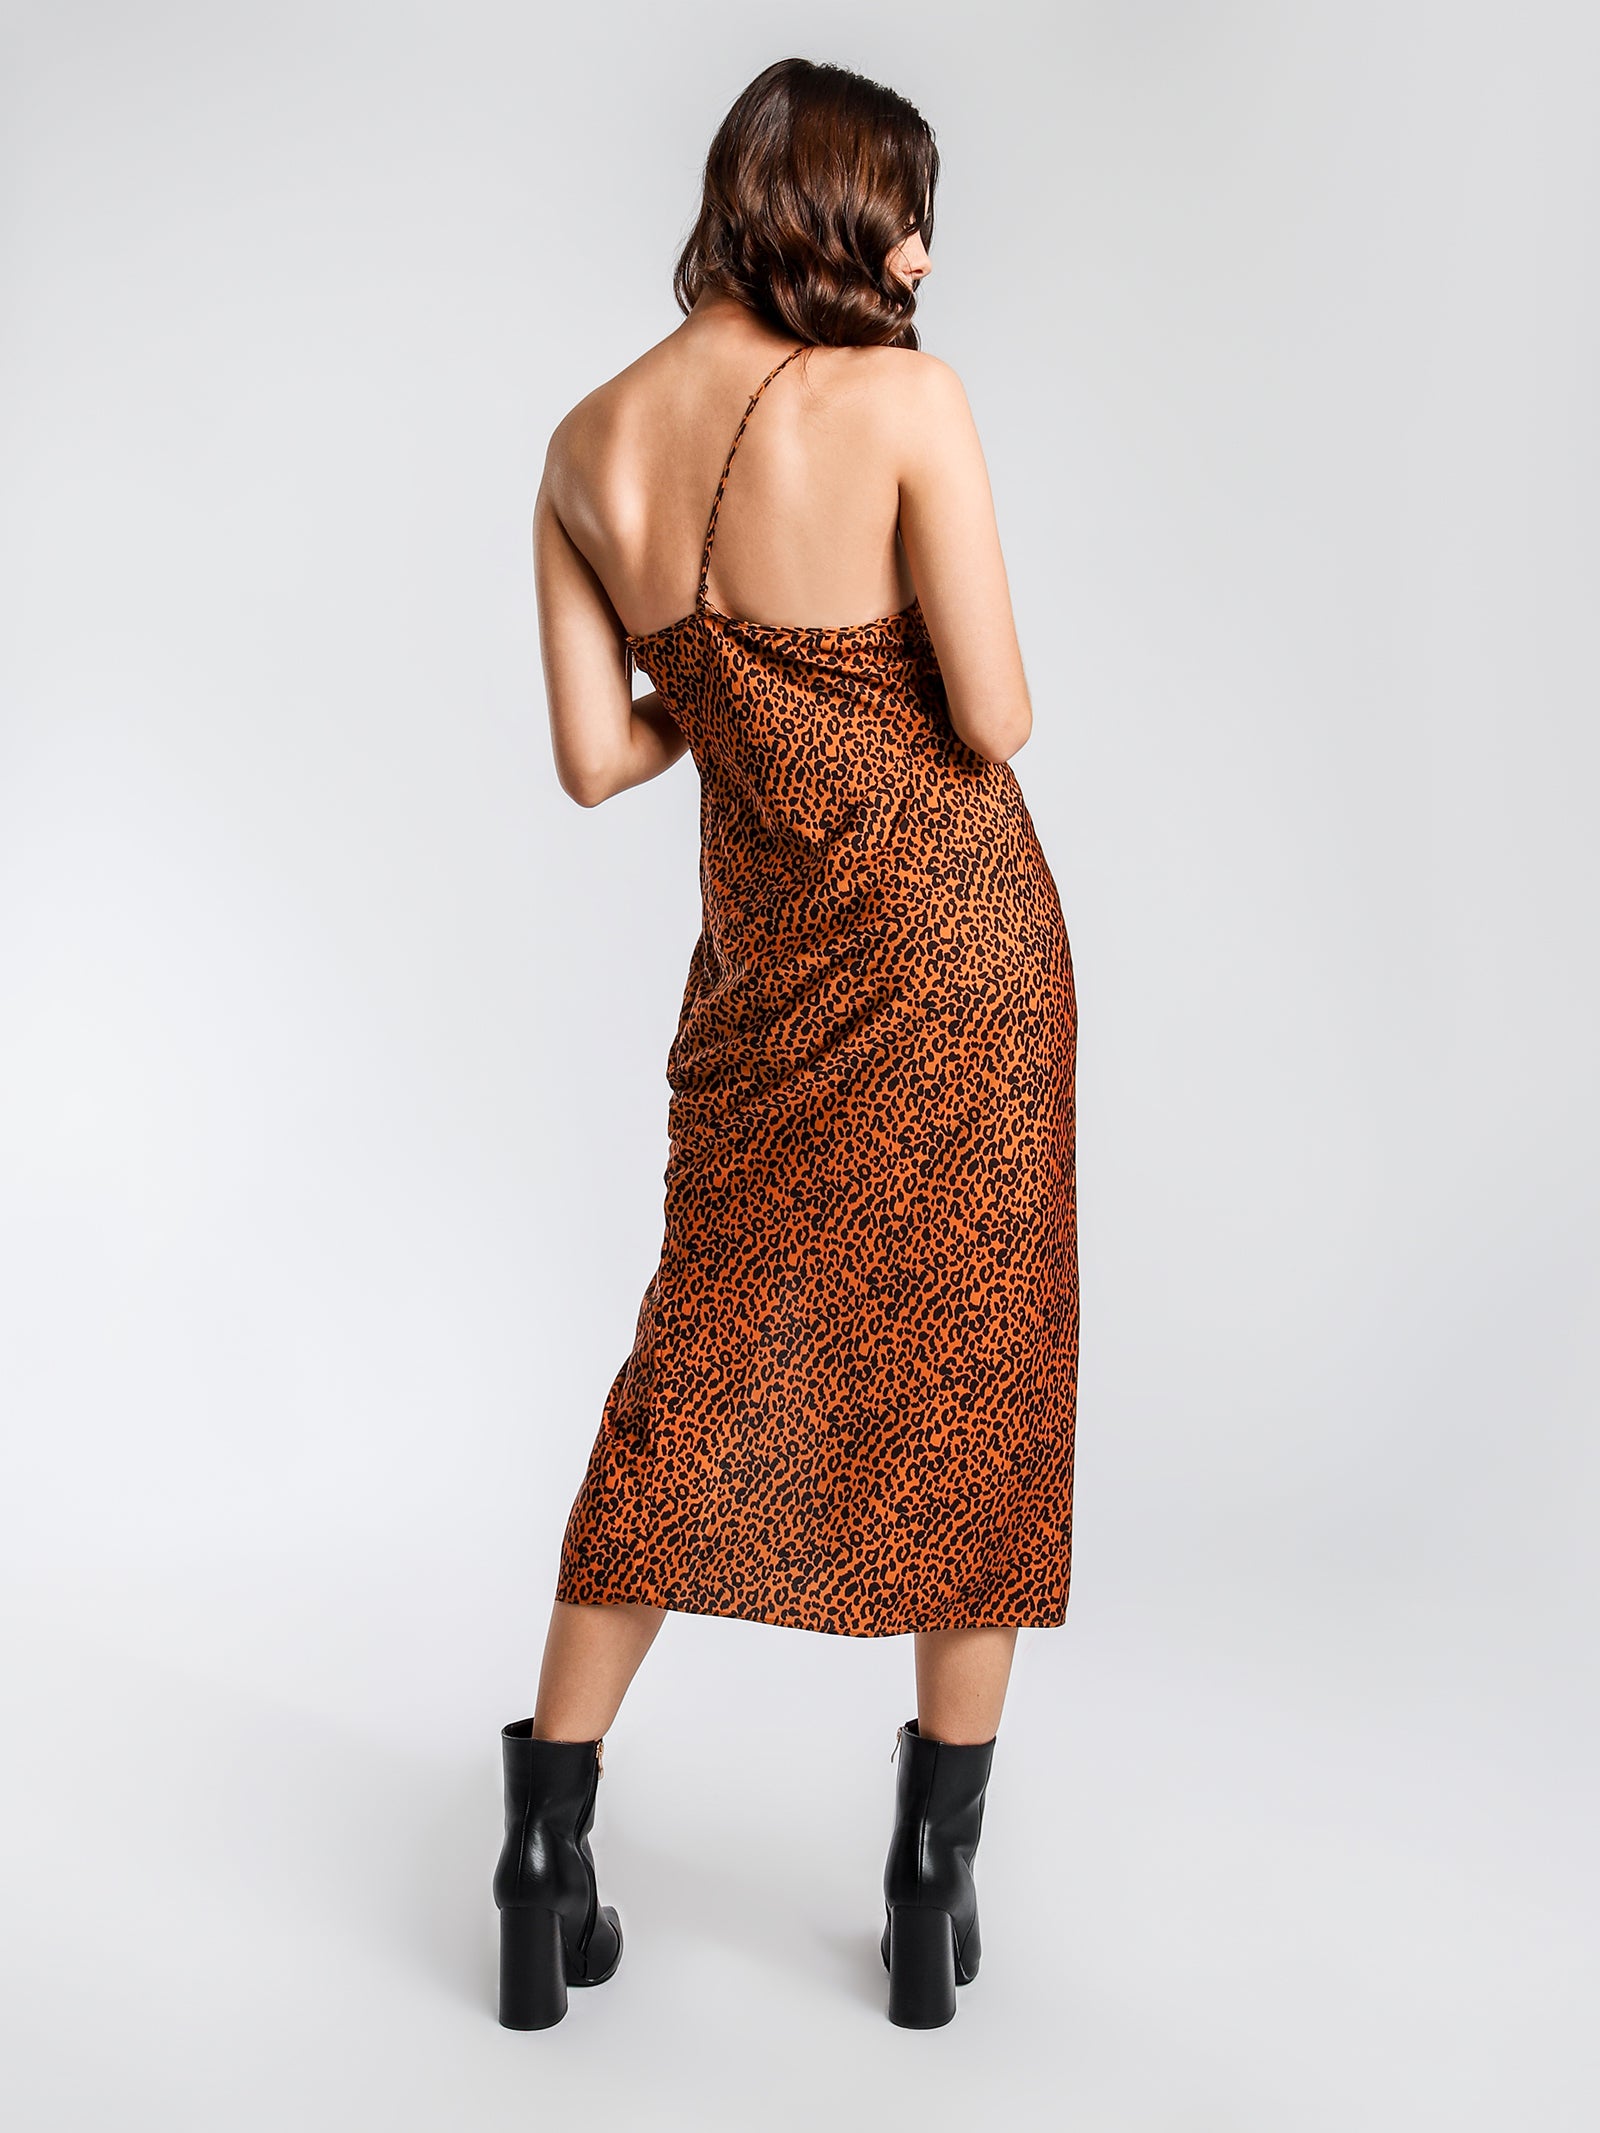 Sahara Asymmetric Strap Midi-Dress in Leopard Print